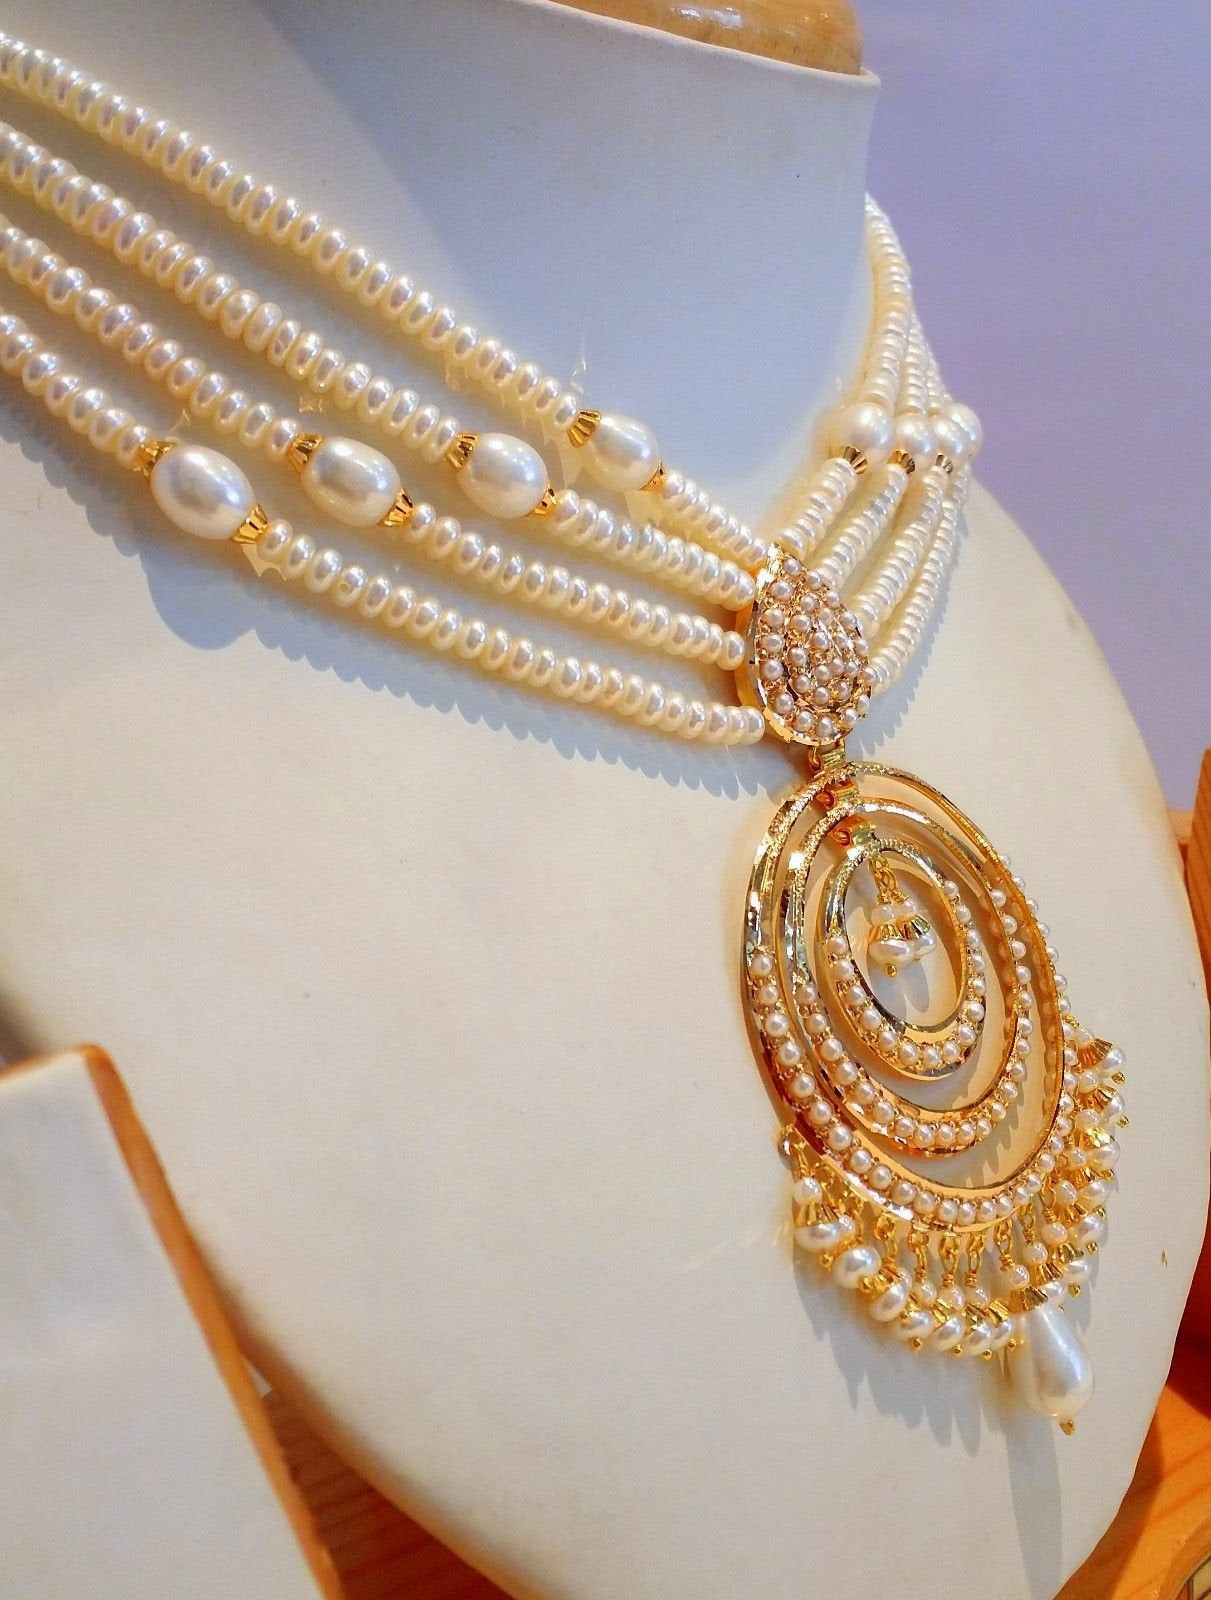 Renaissance Pearl Pendant in 18K Yellow Gold with Pearls and Diamonds,  44.5mm | David Yurman